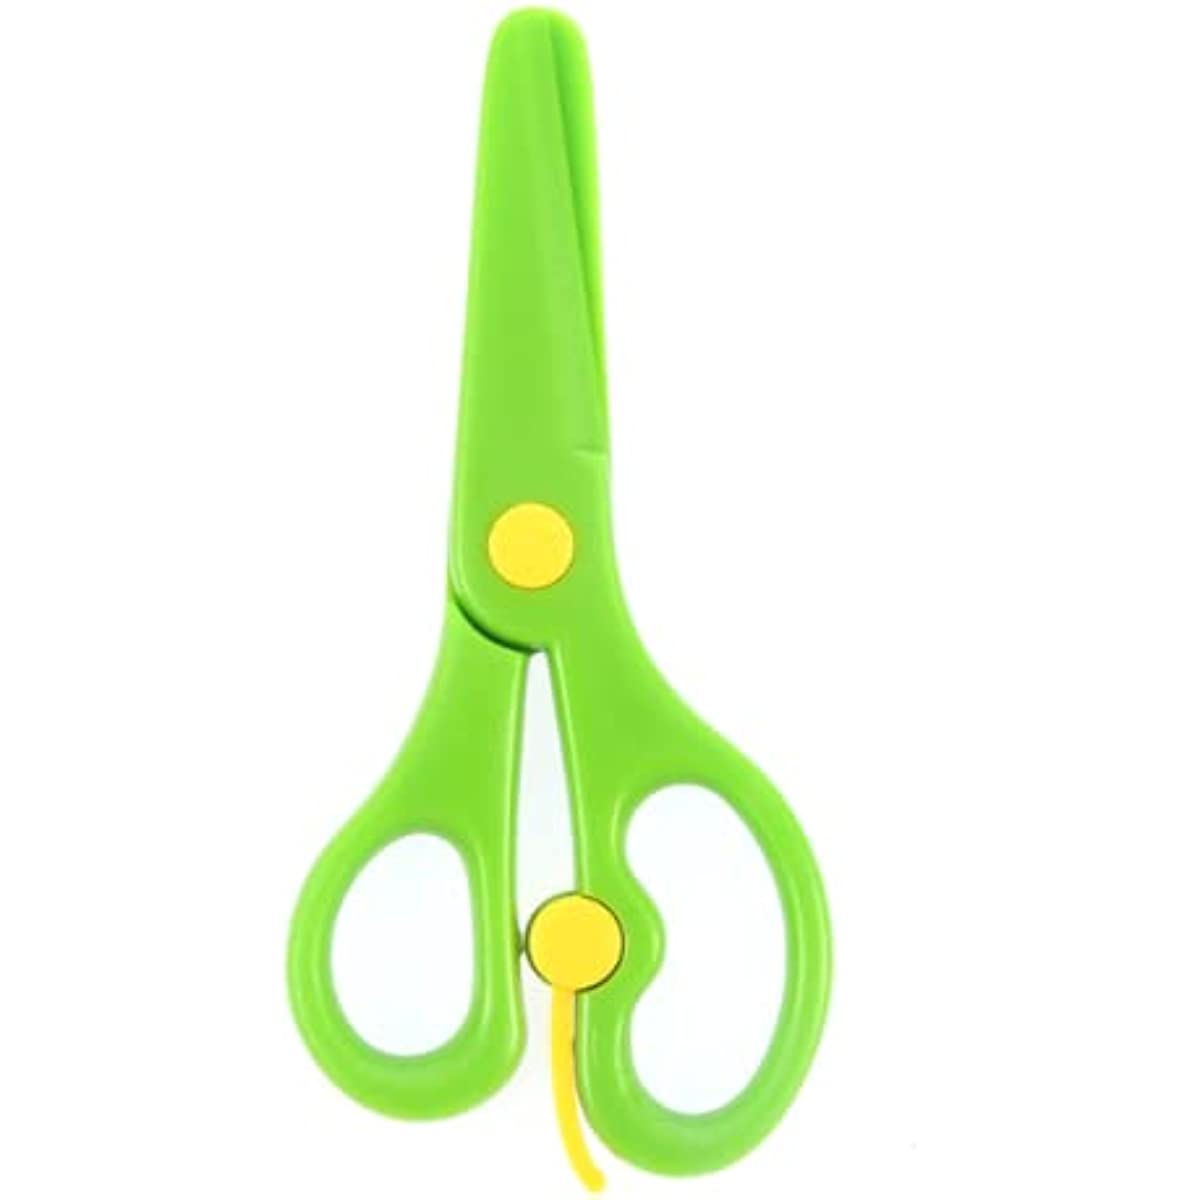 Playdough scissors